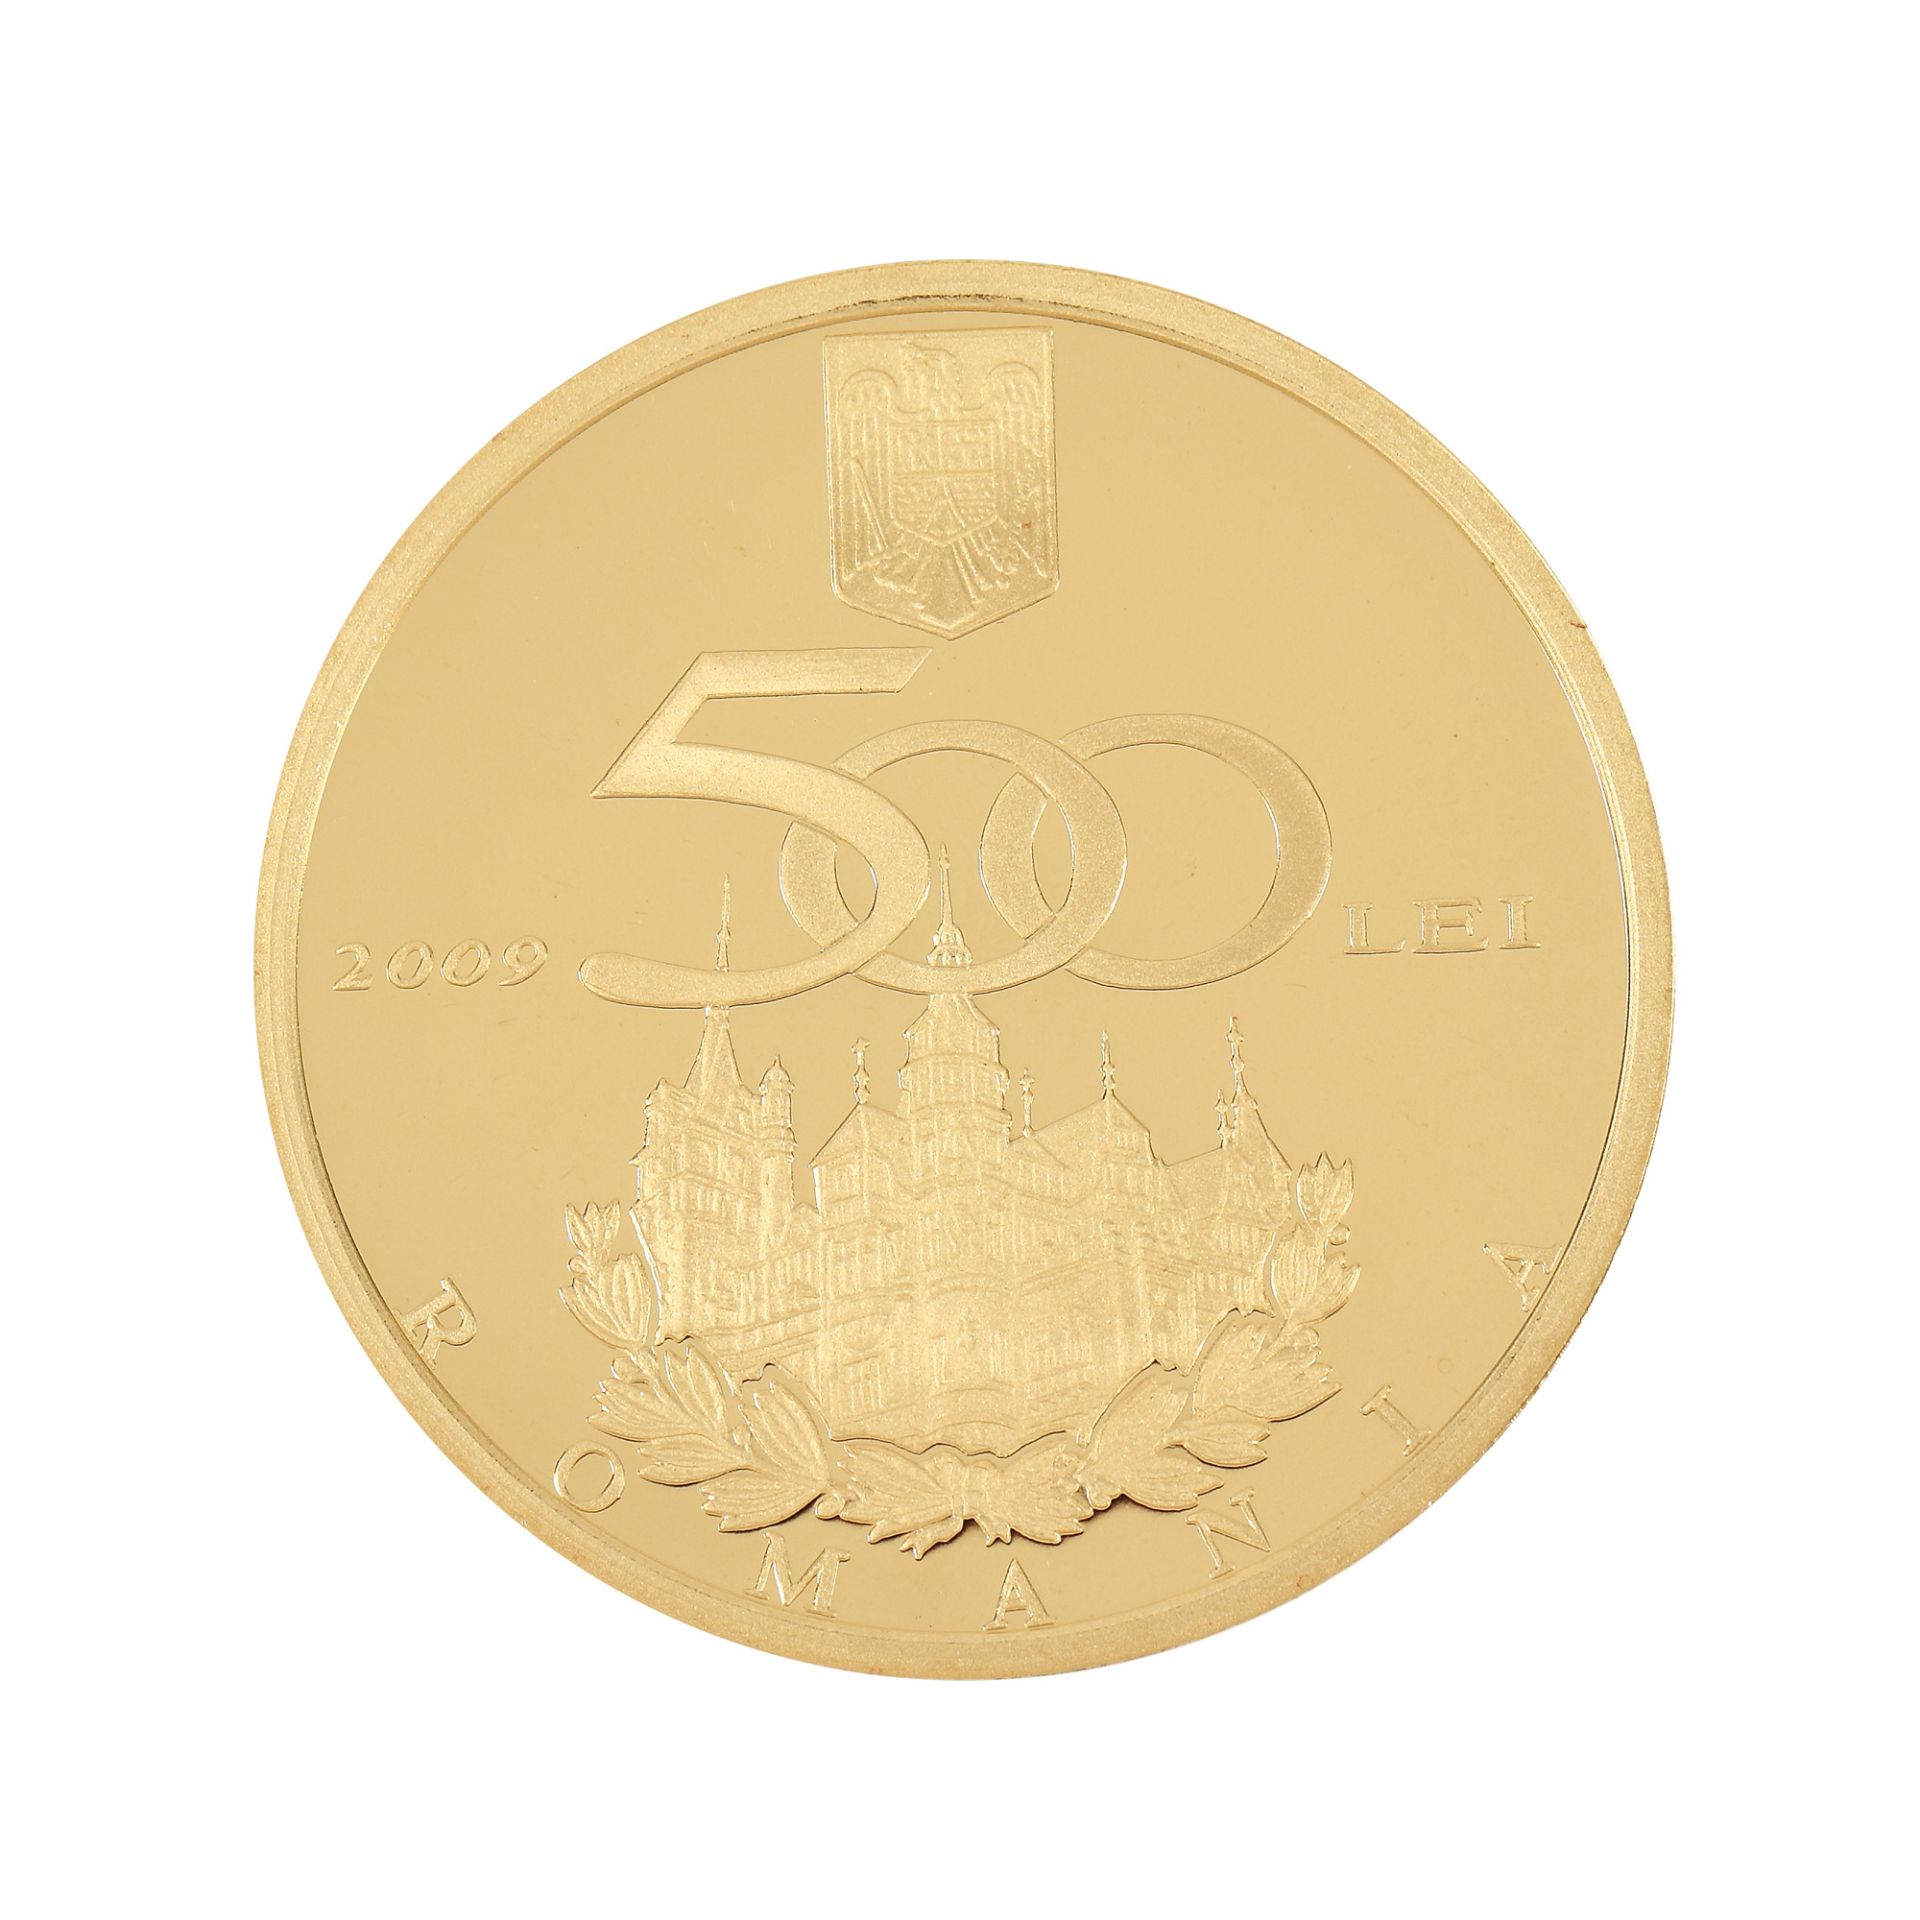 BNR commemorative coin, Carol I 1839-2009, gold - Image 2 of 2